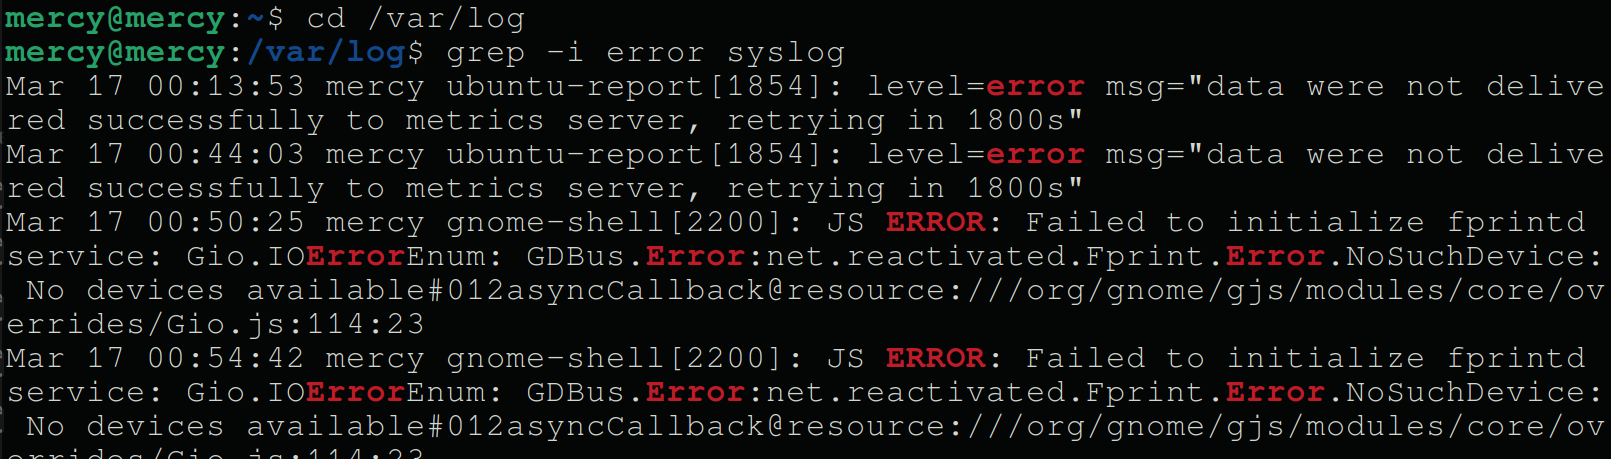 Finding error logs